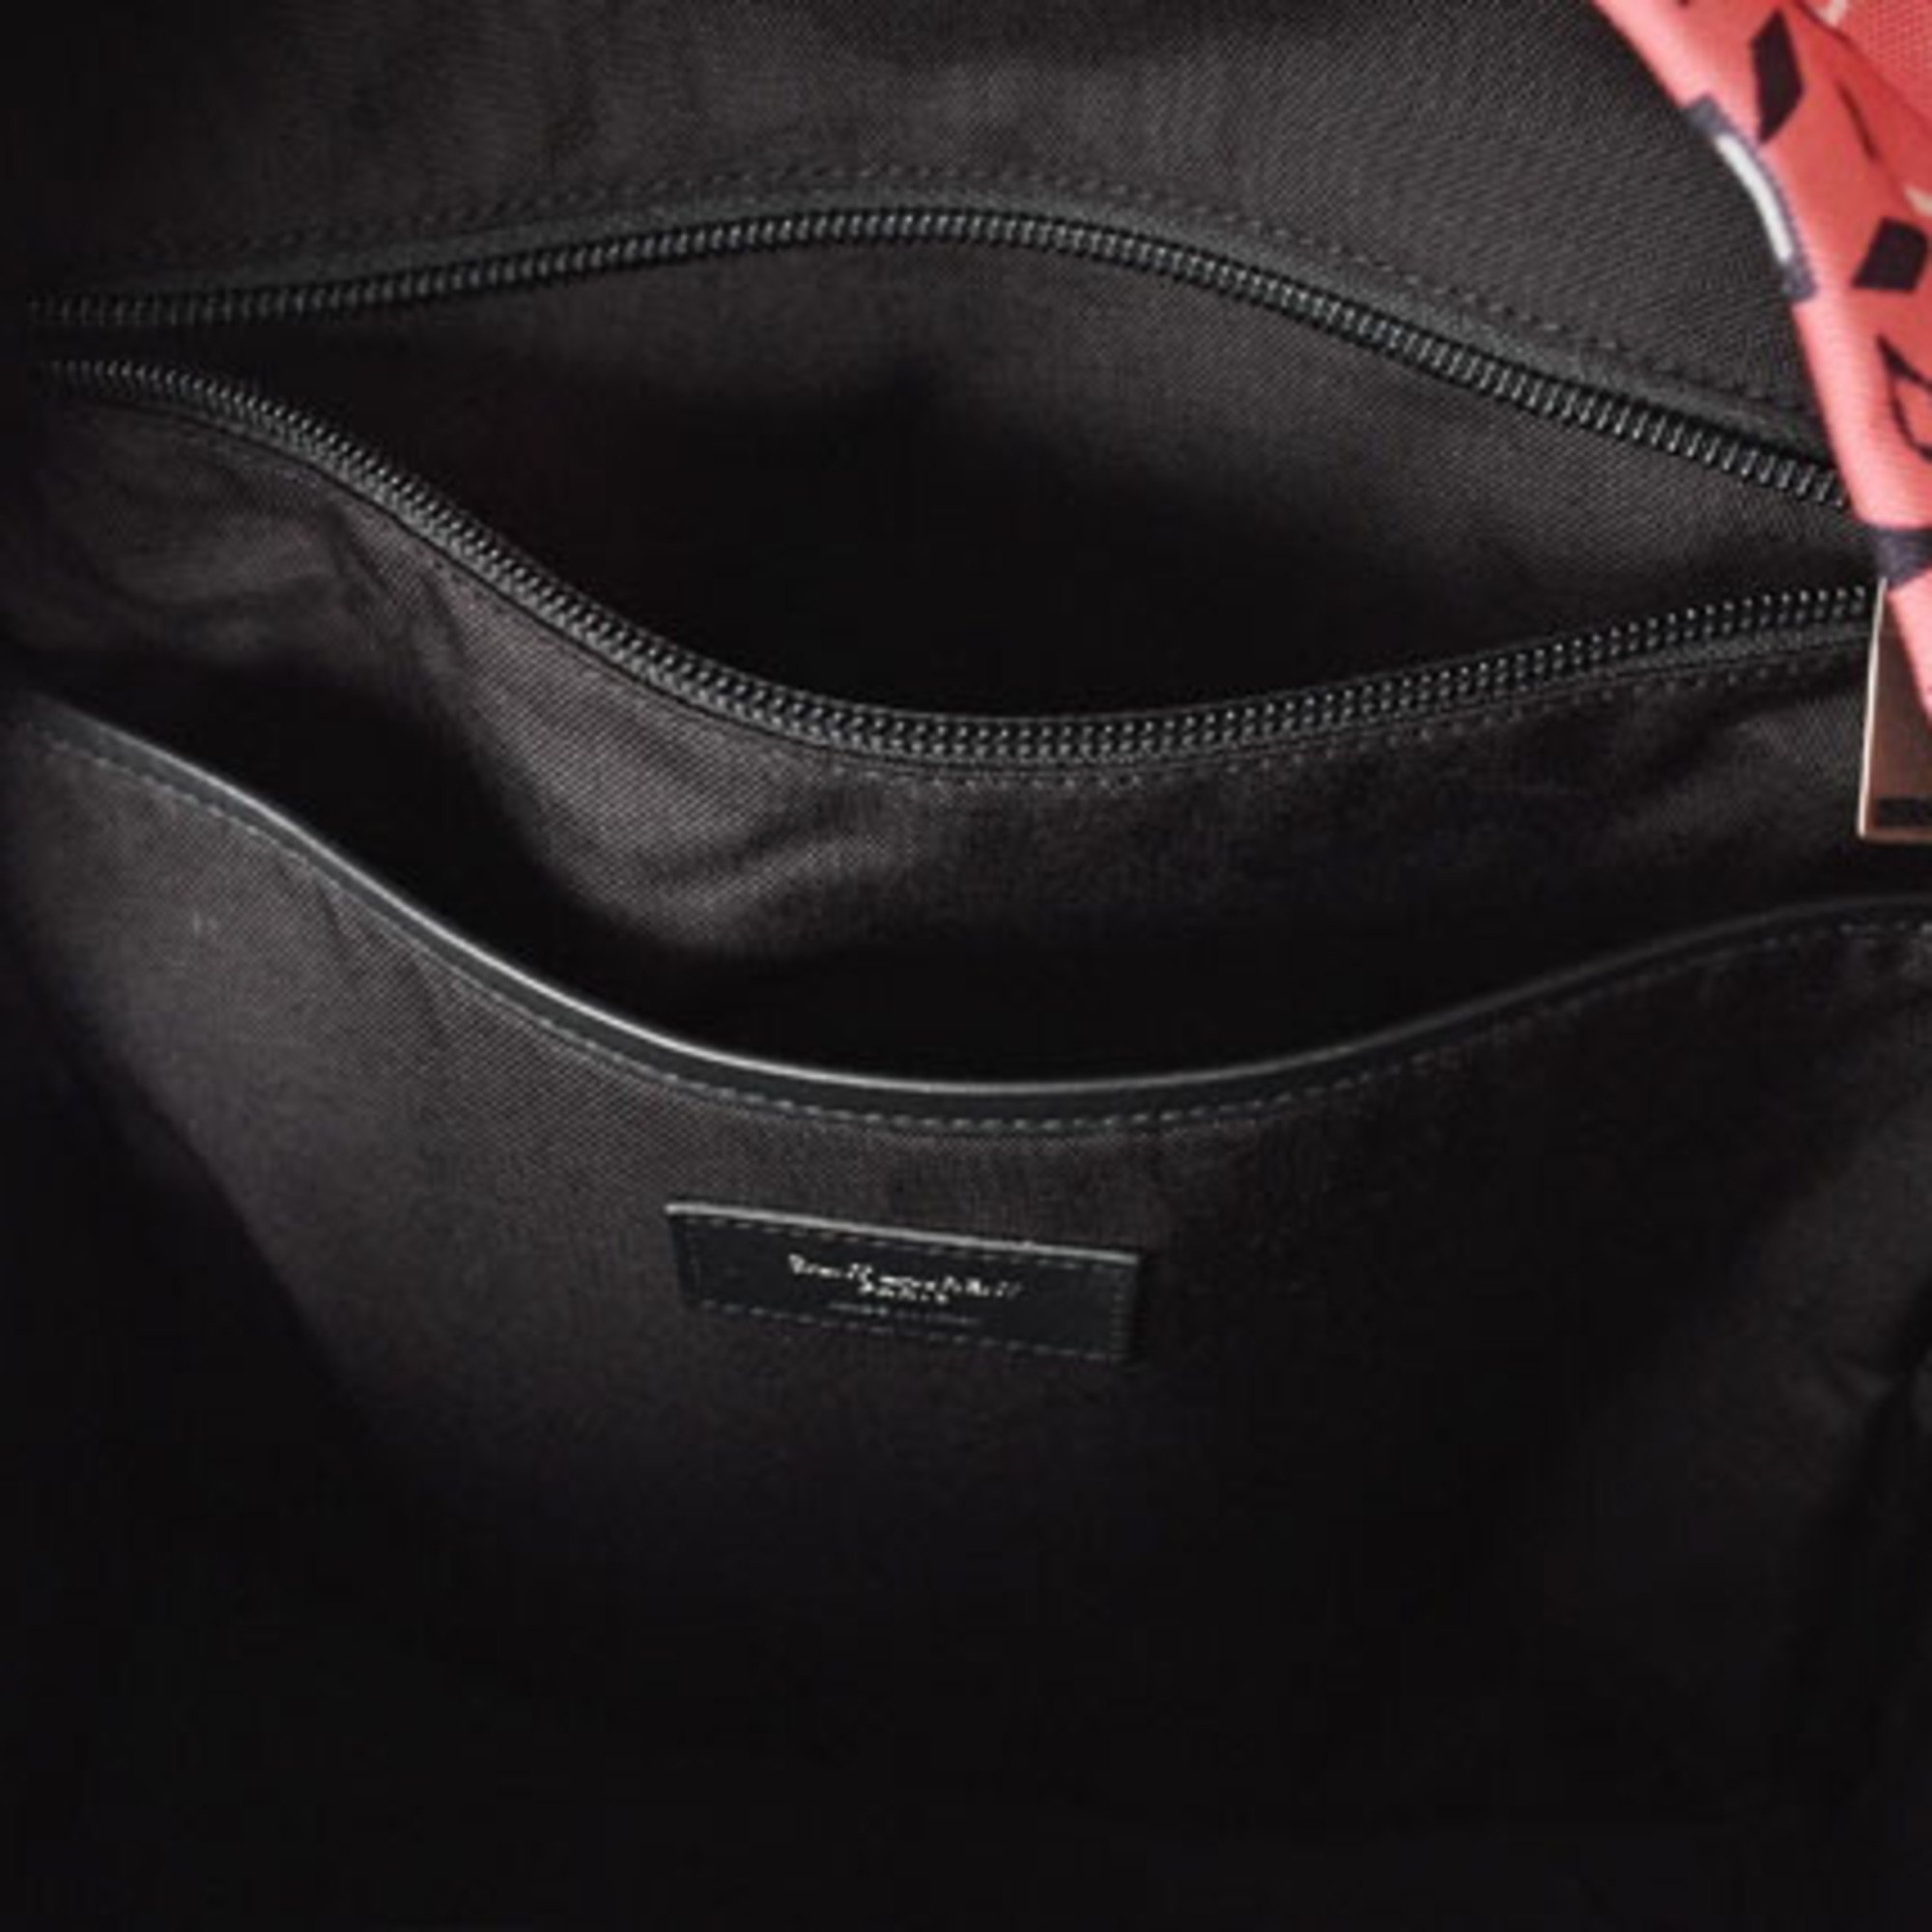 Saint Laurent backpack rucksack SAINT LAURENT bag canvas music pink 534967 HPM1F 5563